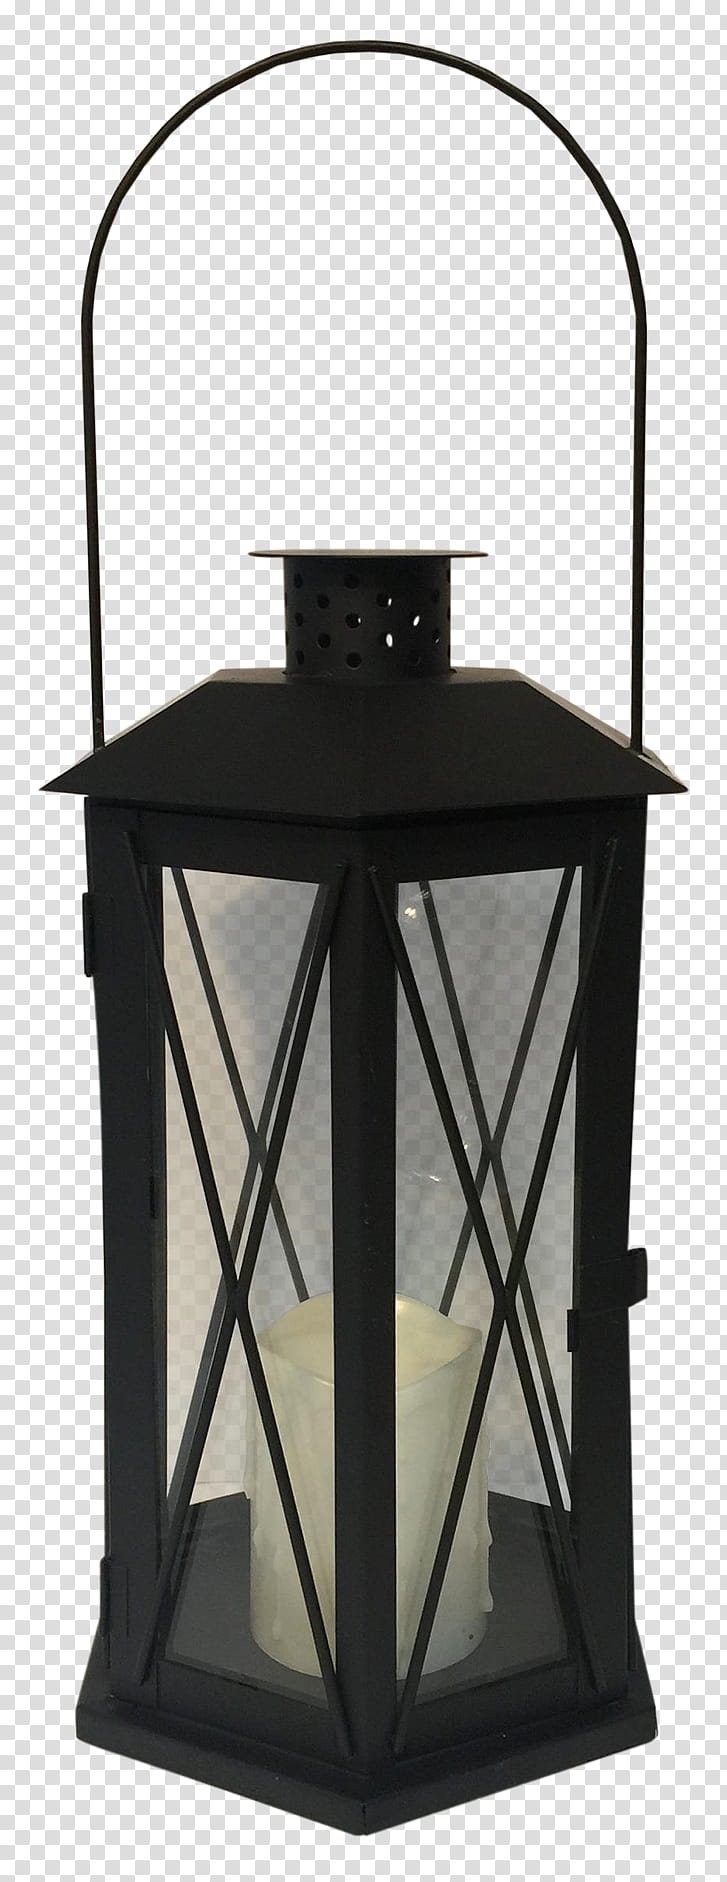 Lanterns, black candle lamp transparent background PNG clipart